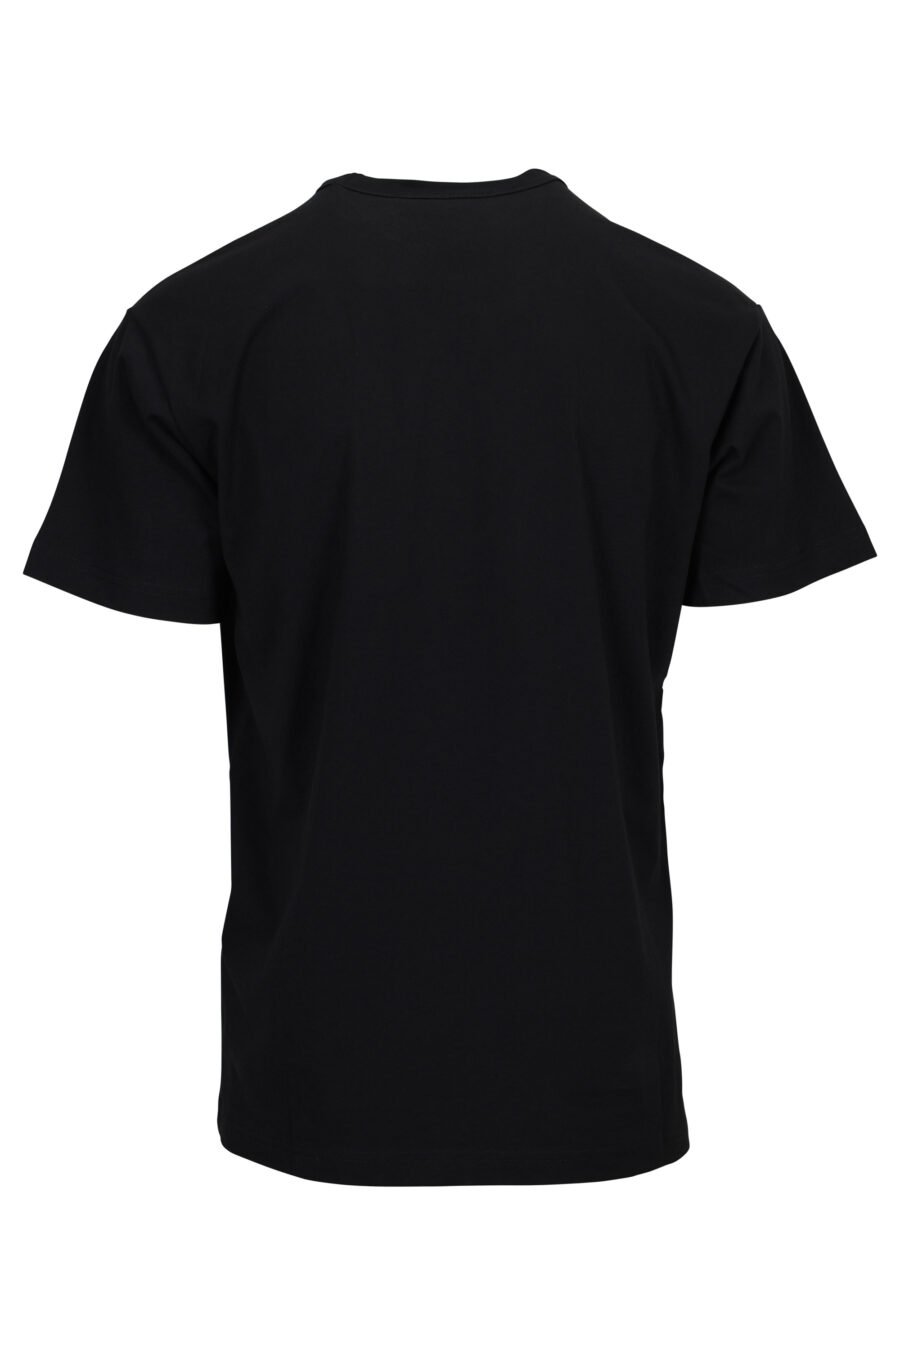 T-shirt noir avec maxillogue baroque déchiré - 8052019603170 1